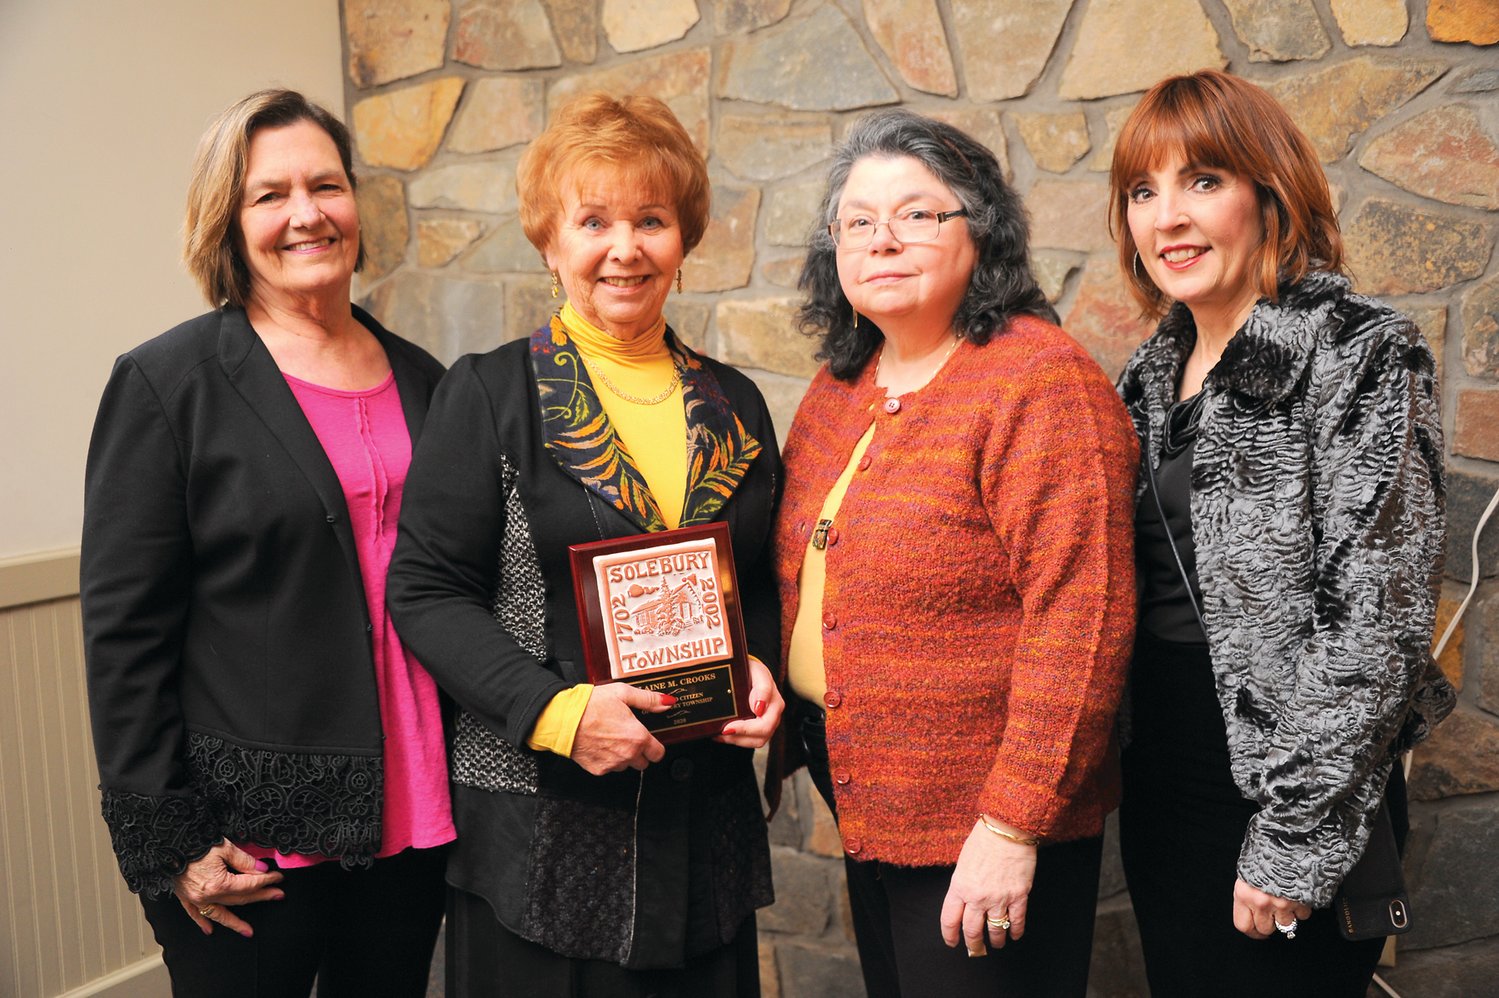 Donneta Crane, Elaine Crooks with the Honored Citizen of Solebury Award, Charlotte Zanidakis, Sue-Ann Devito. Photograph by Carol Ross.